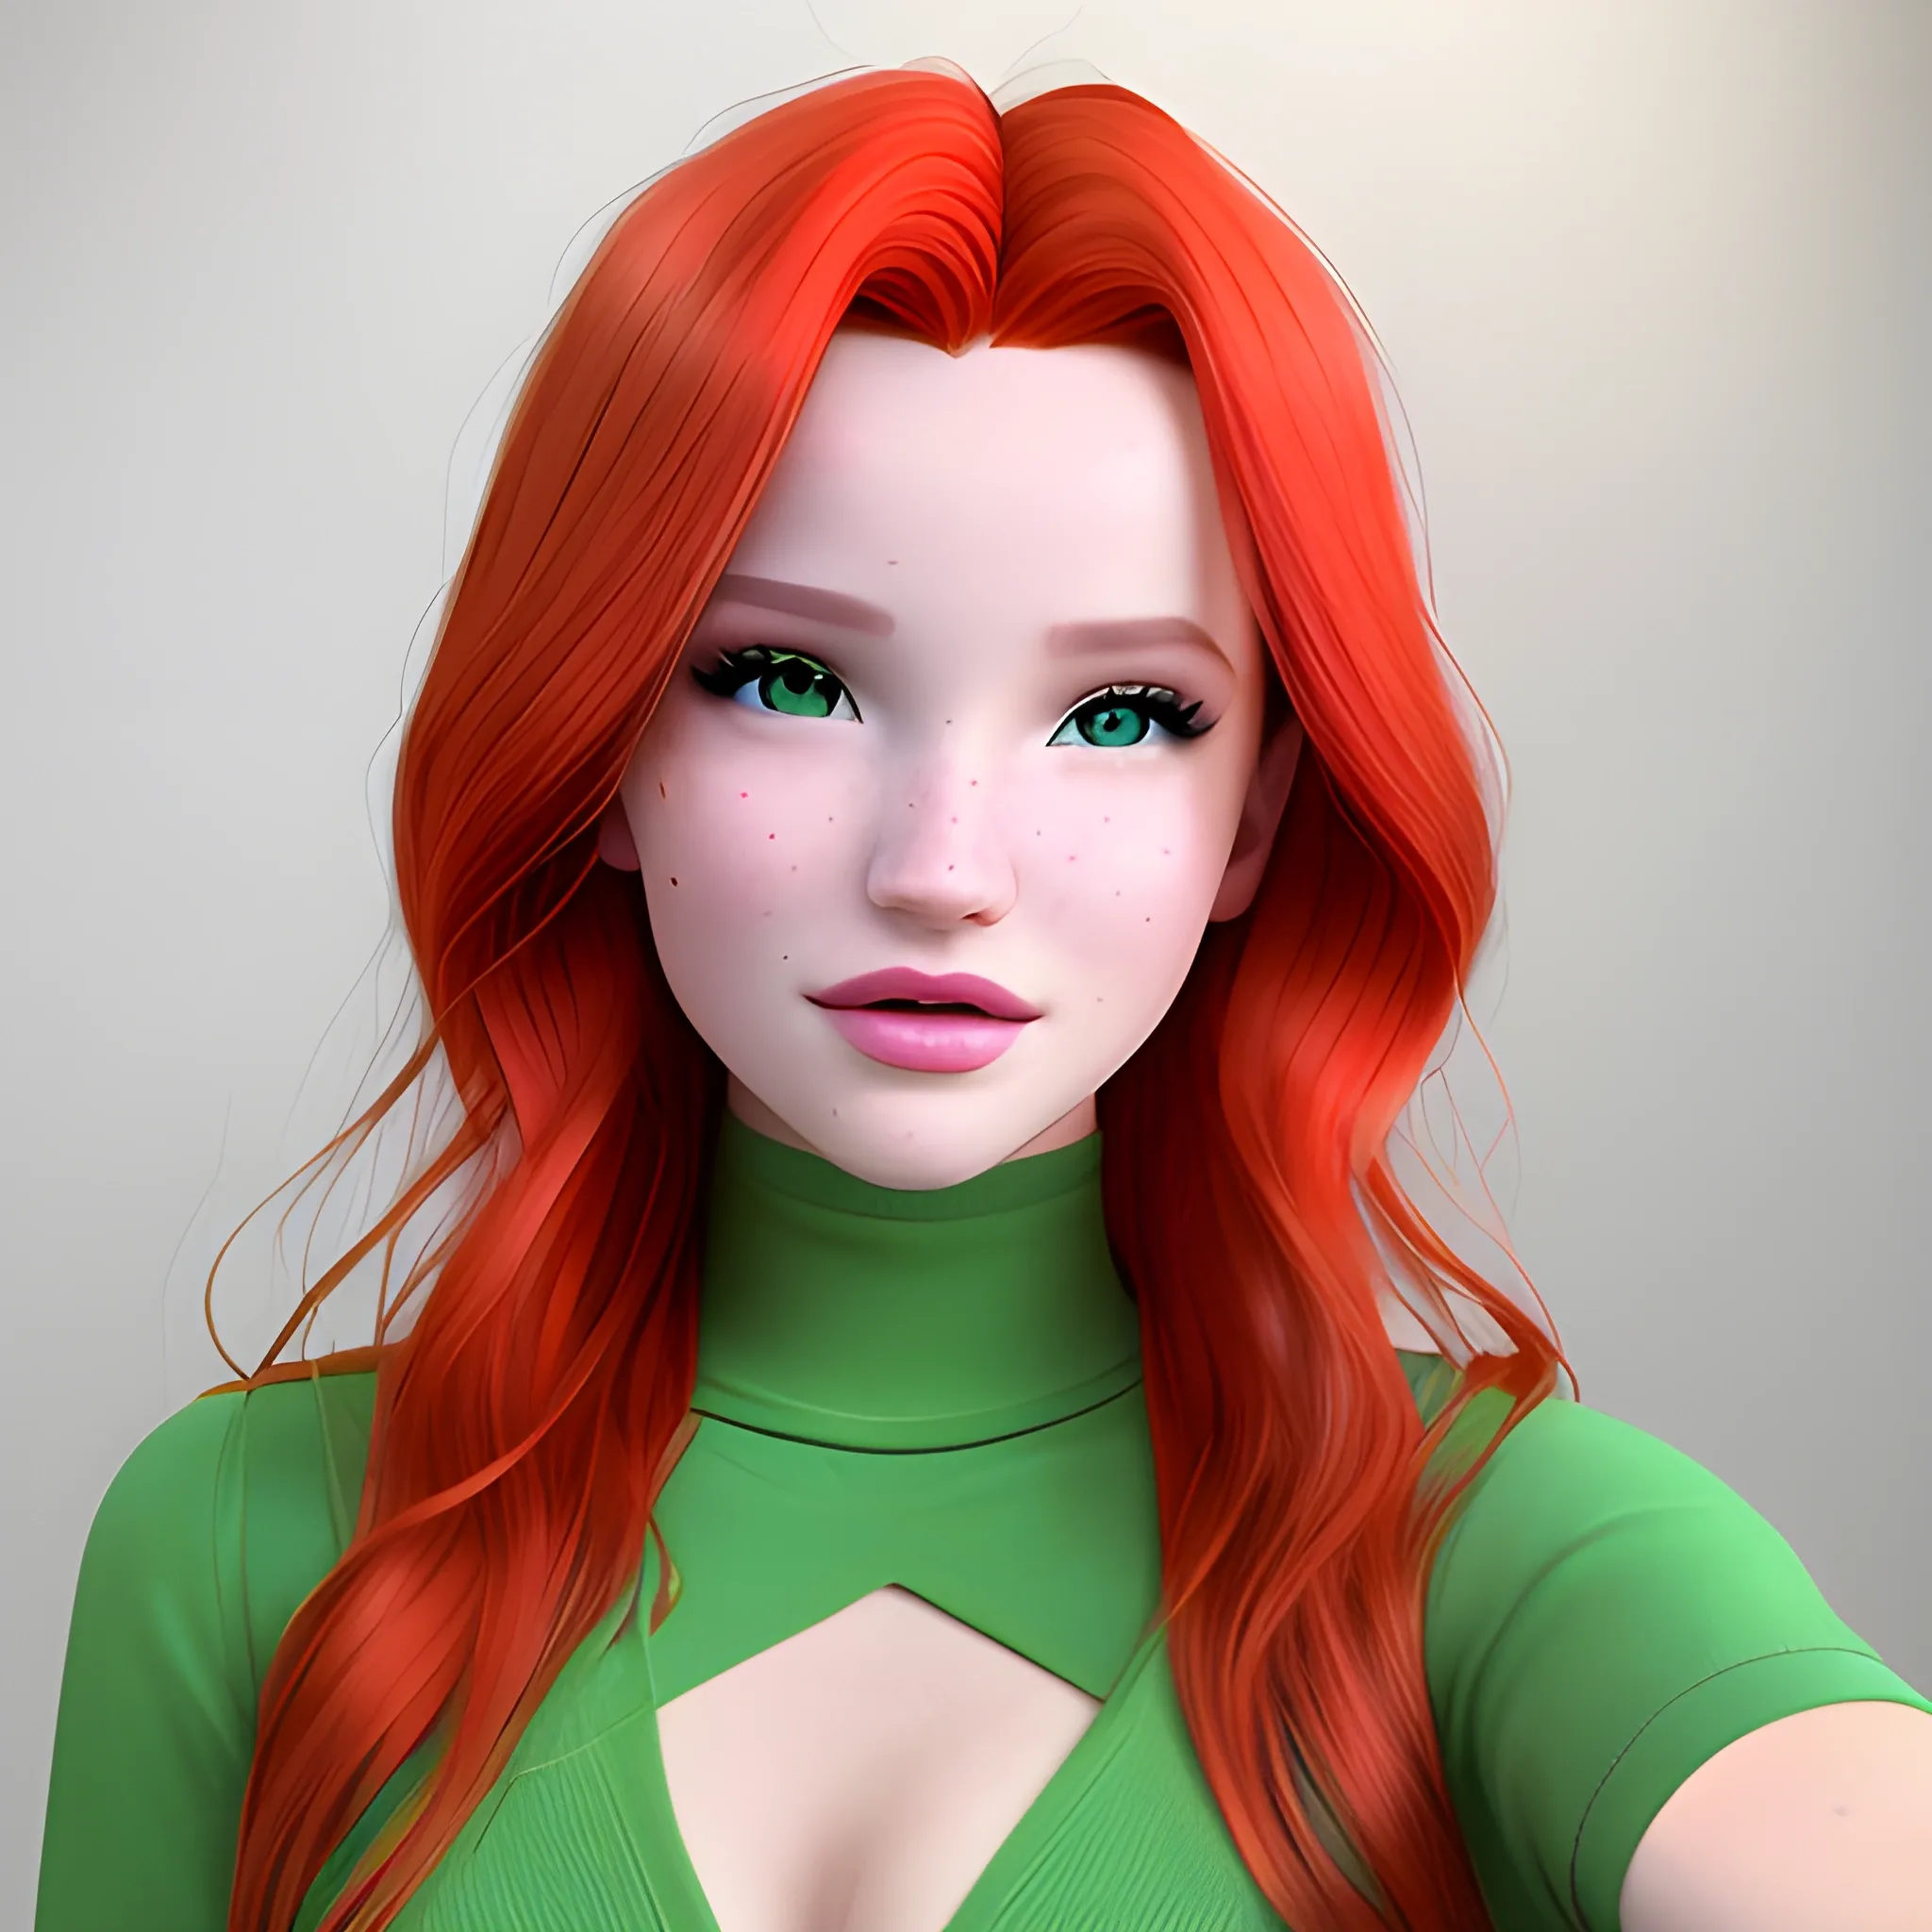 Bella Thorne / Dove Cameron face morph, green eyes, red hair, 3D